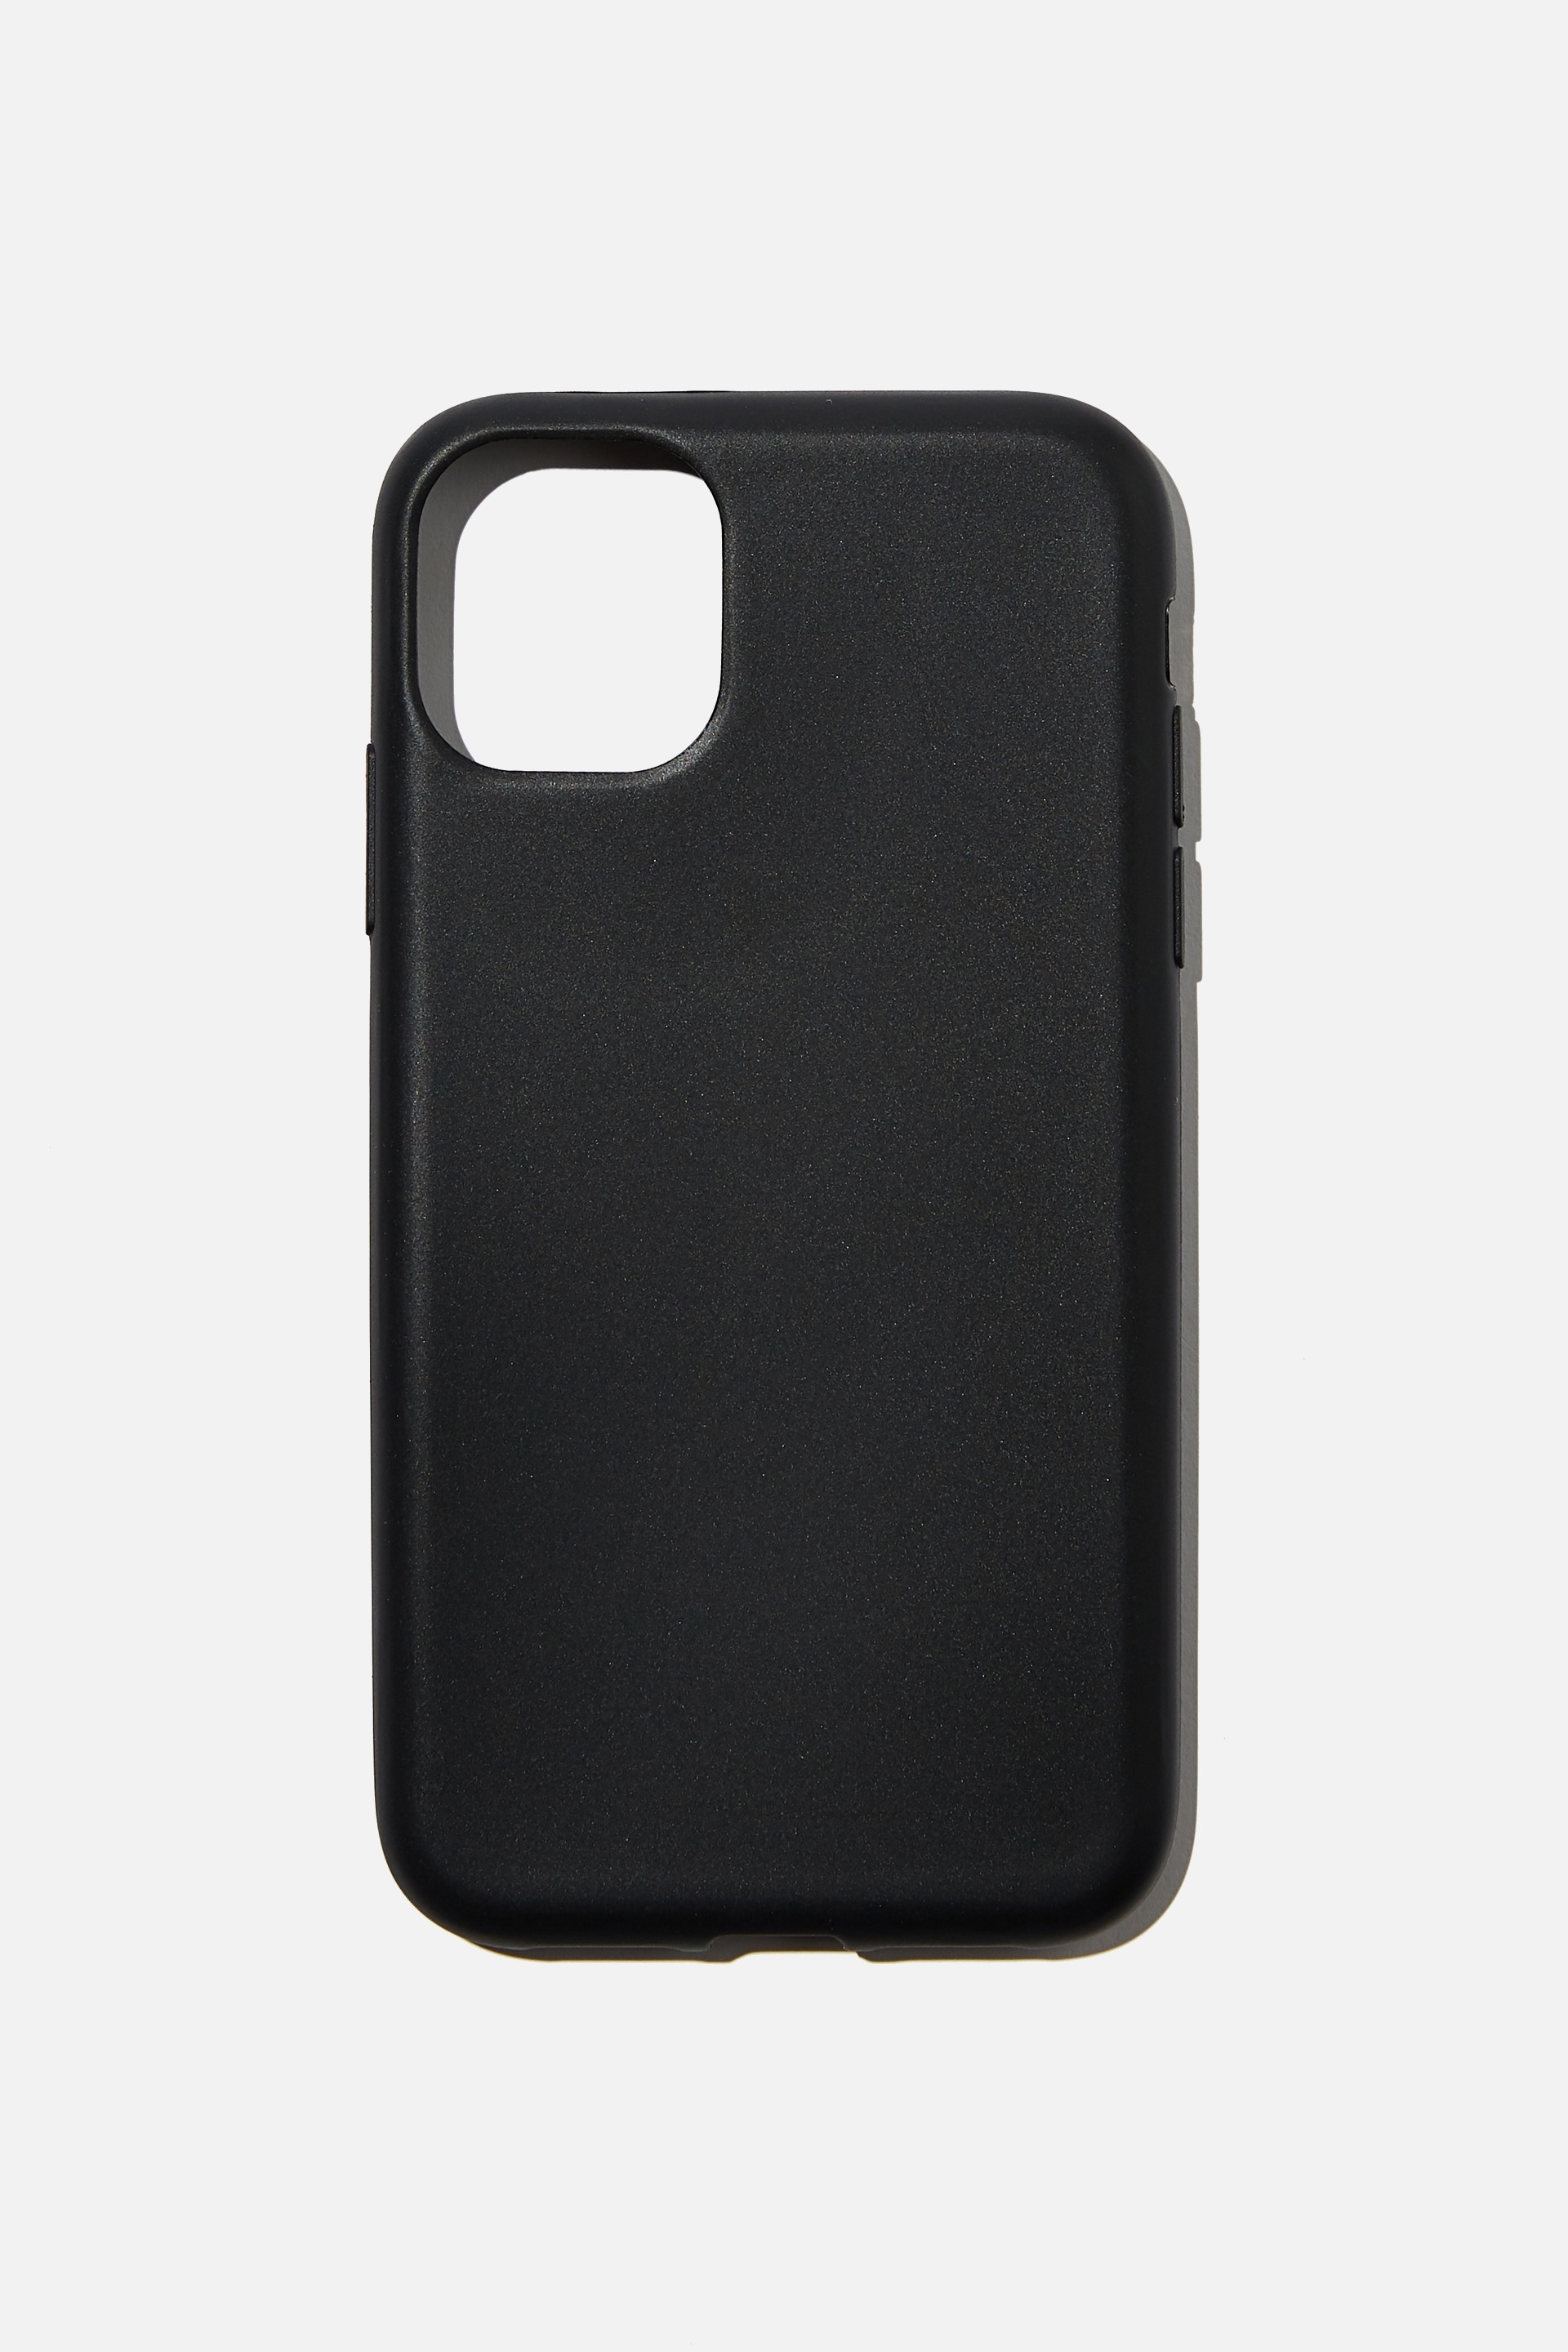 Typo - Recycled Phone Case iPhone 11 - Black